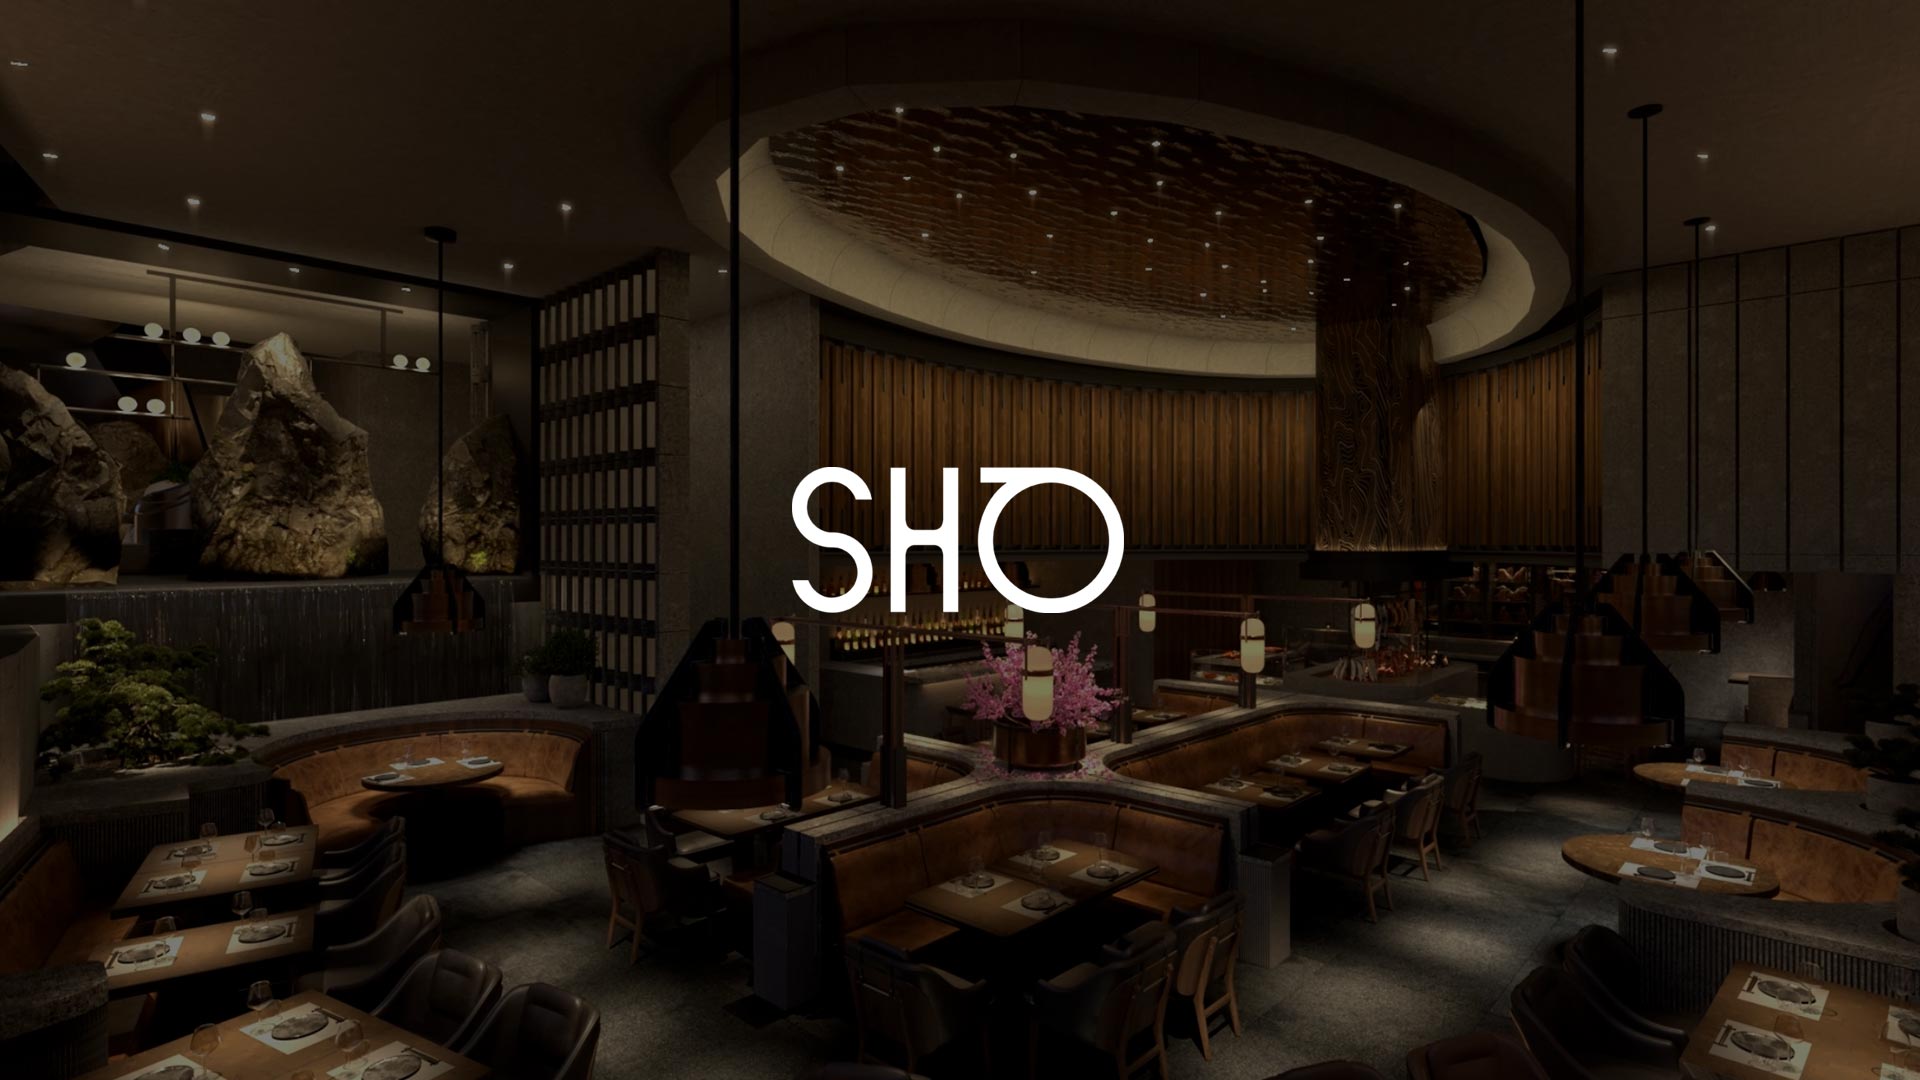 SHŌ Group // CGI Visualization & Animation Film